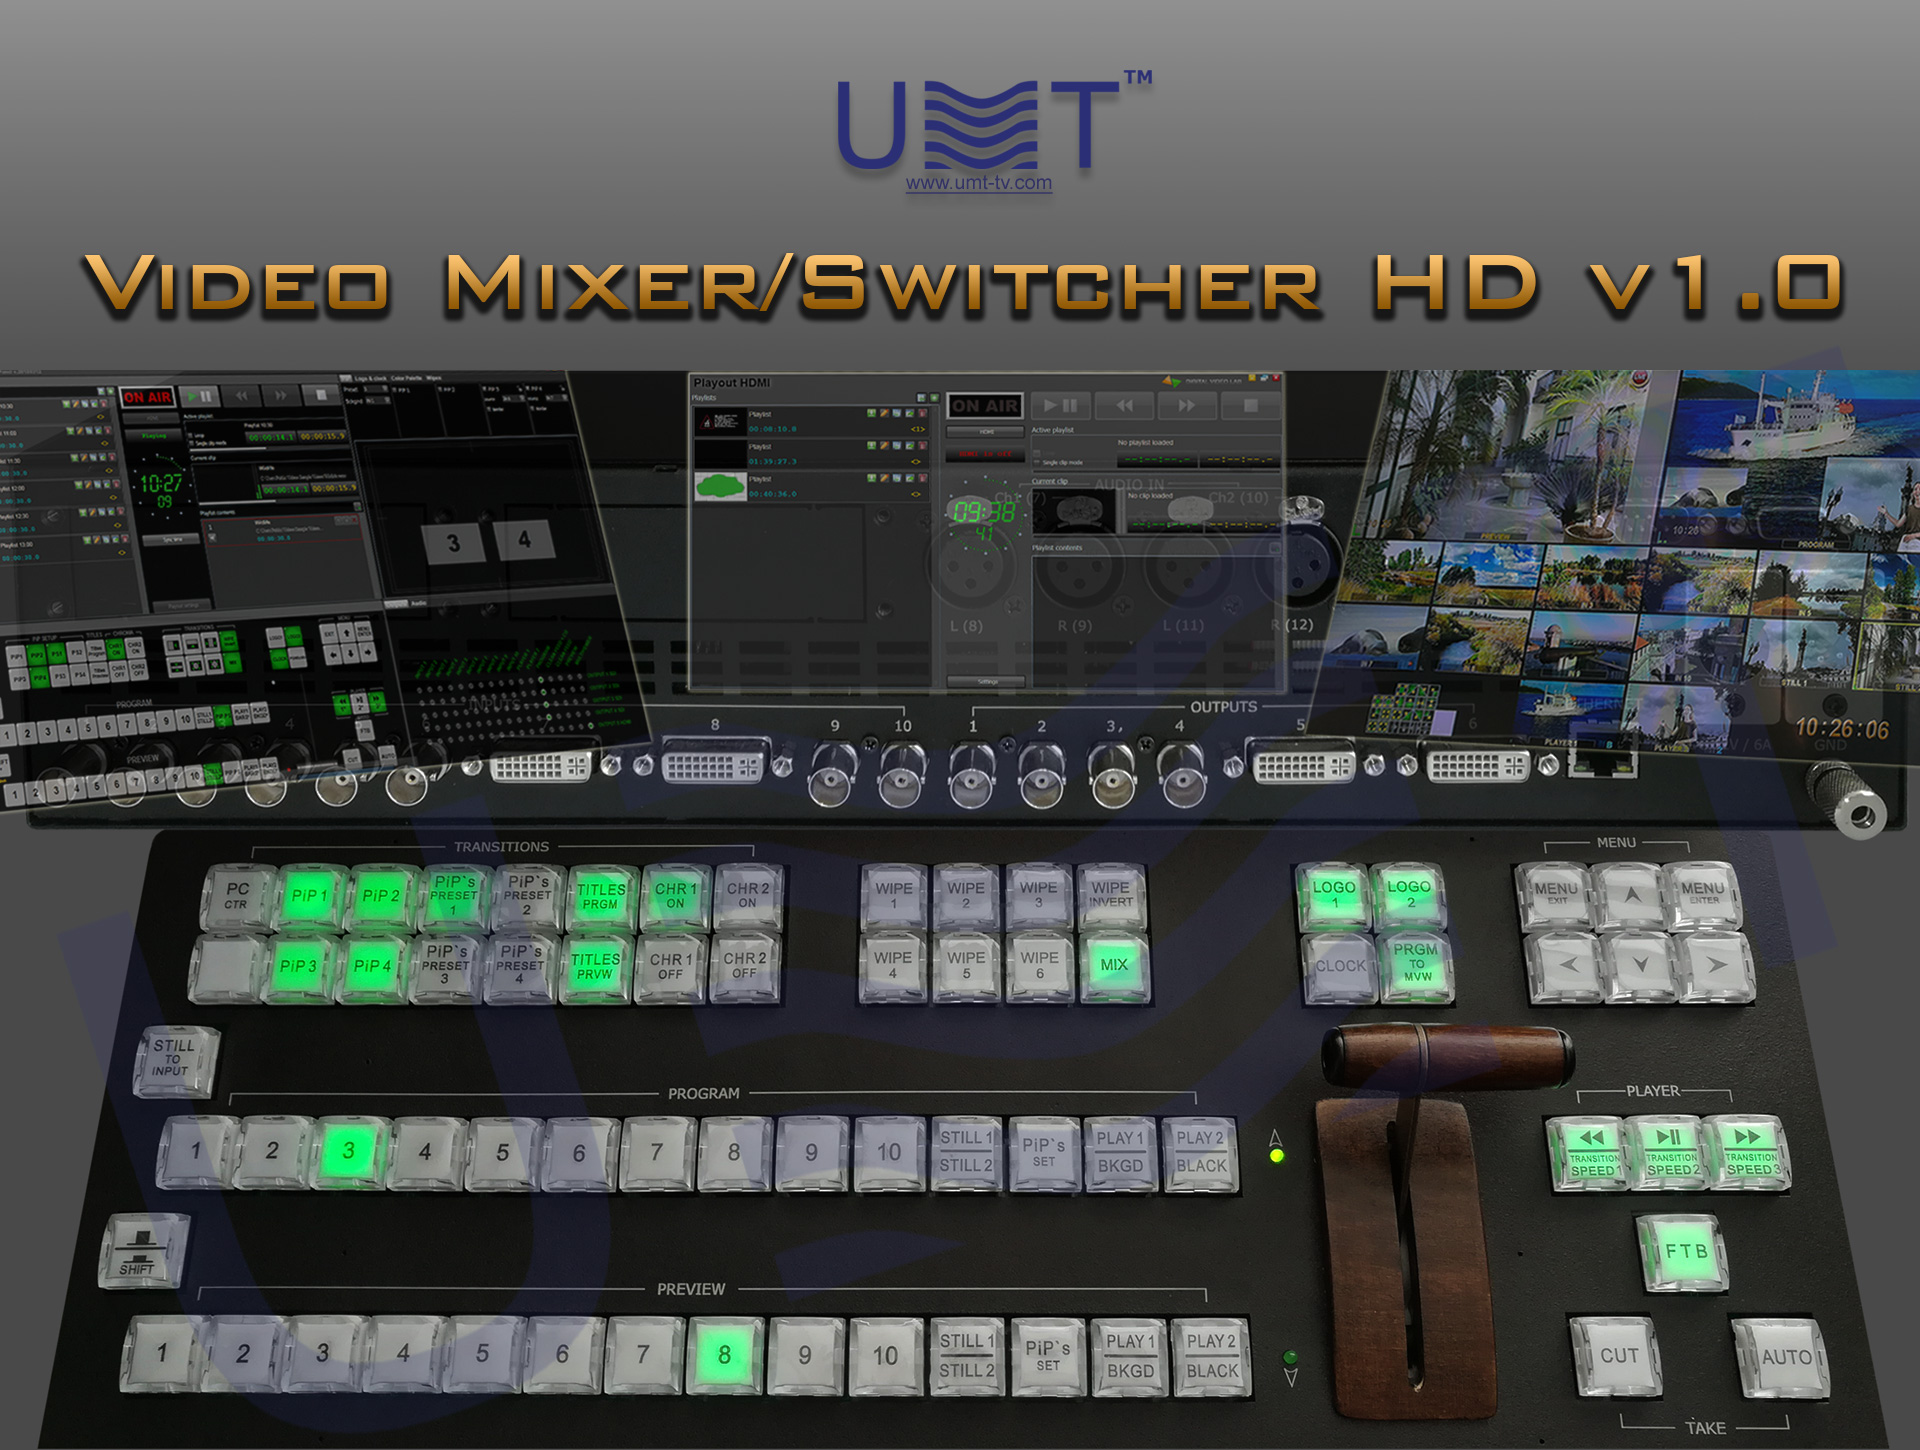 Video mixer switcher hd v1.0 umt llc